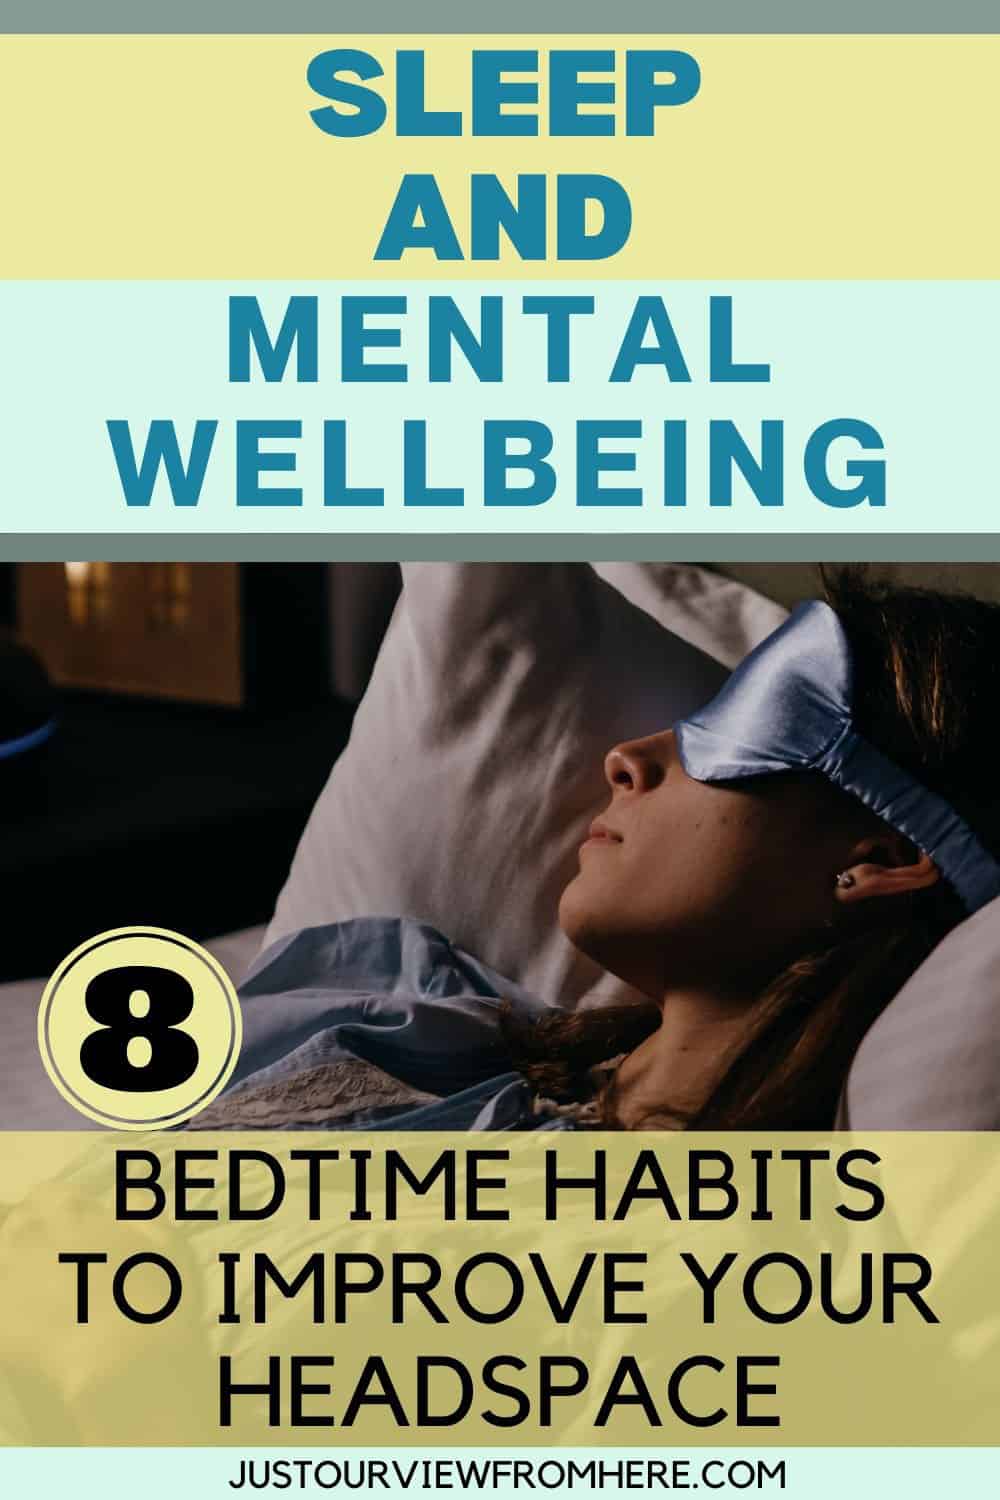 WOMAN SLEEPING WEARING SLEEP MASK, TEXT OVERLAY SLEEP AND MENTAL HEALTH WELLBEING  8 BEDTIME HABVITS TO IMROVE YOUR HEADSPACE